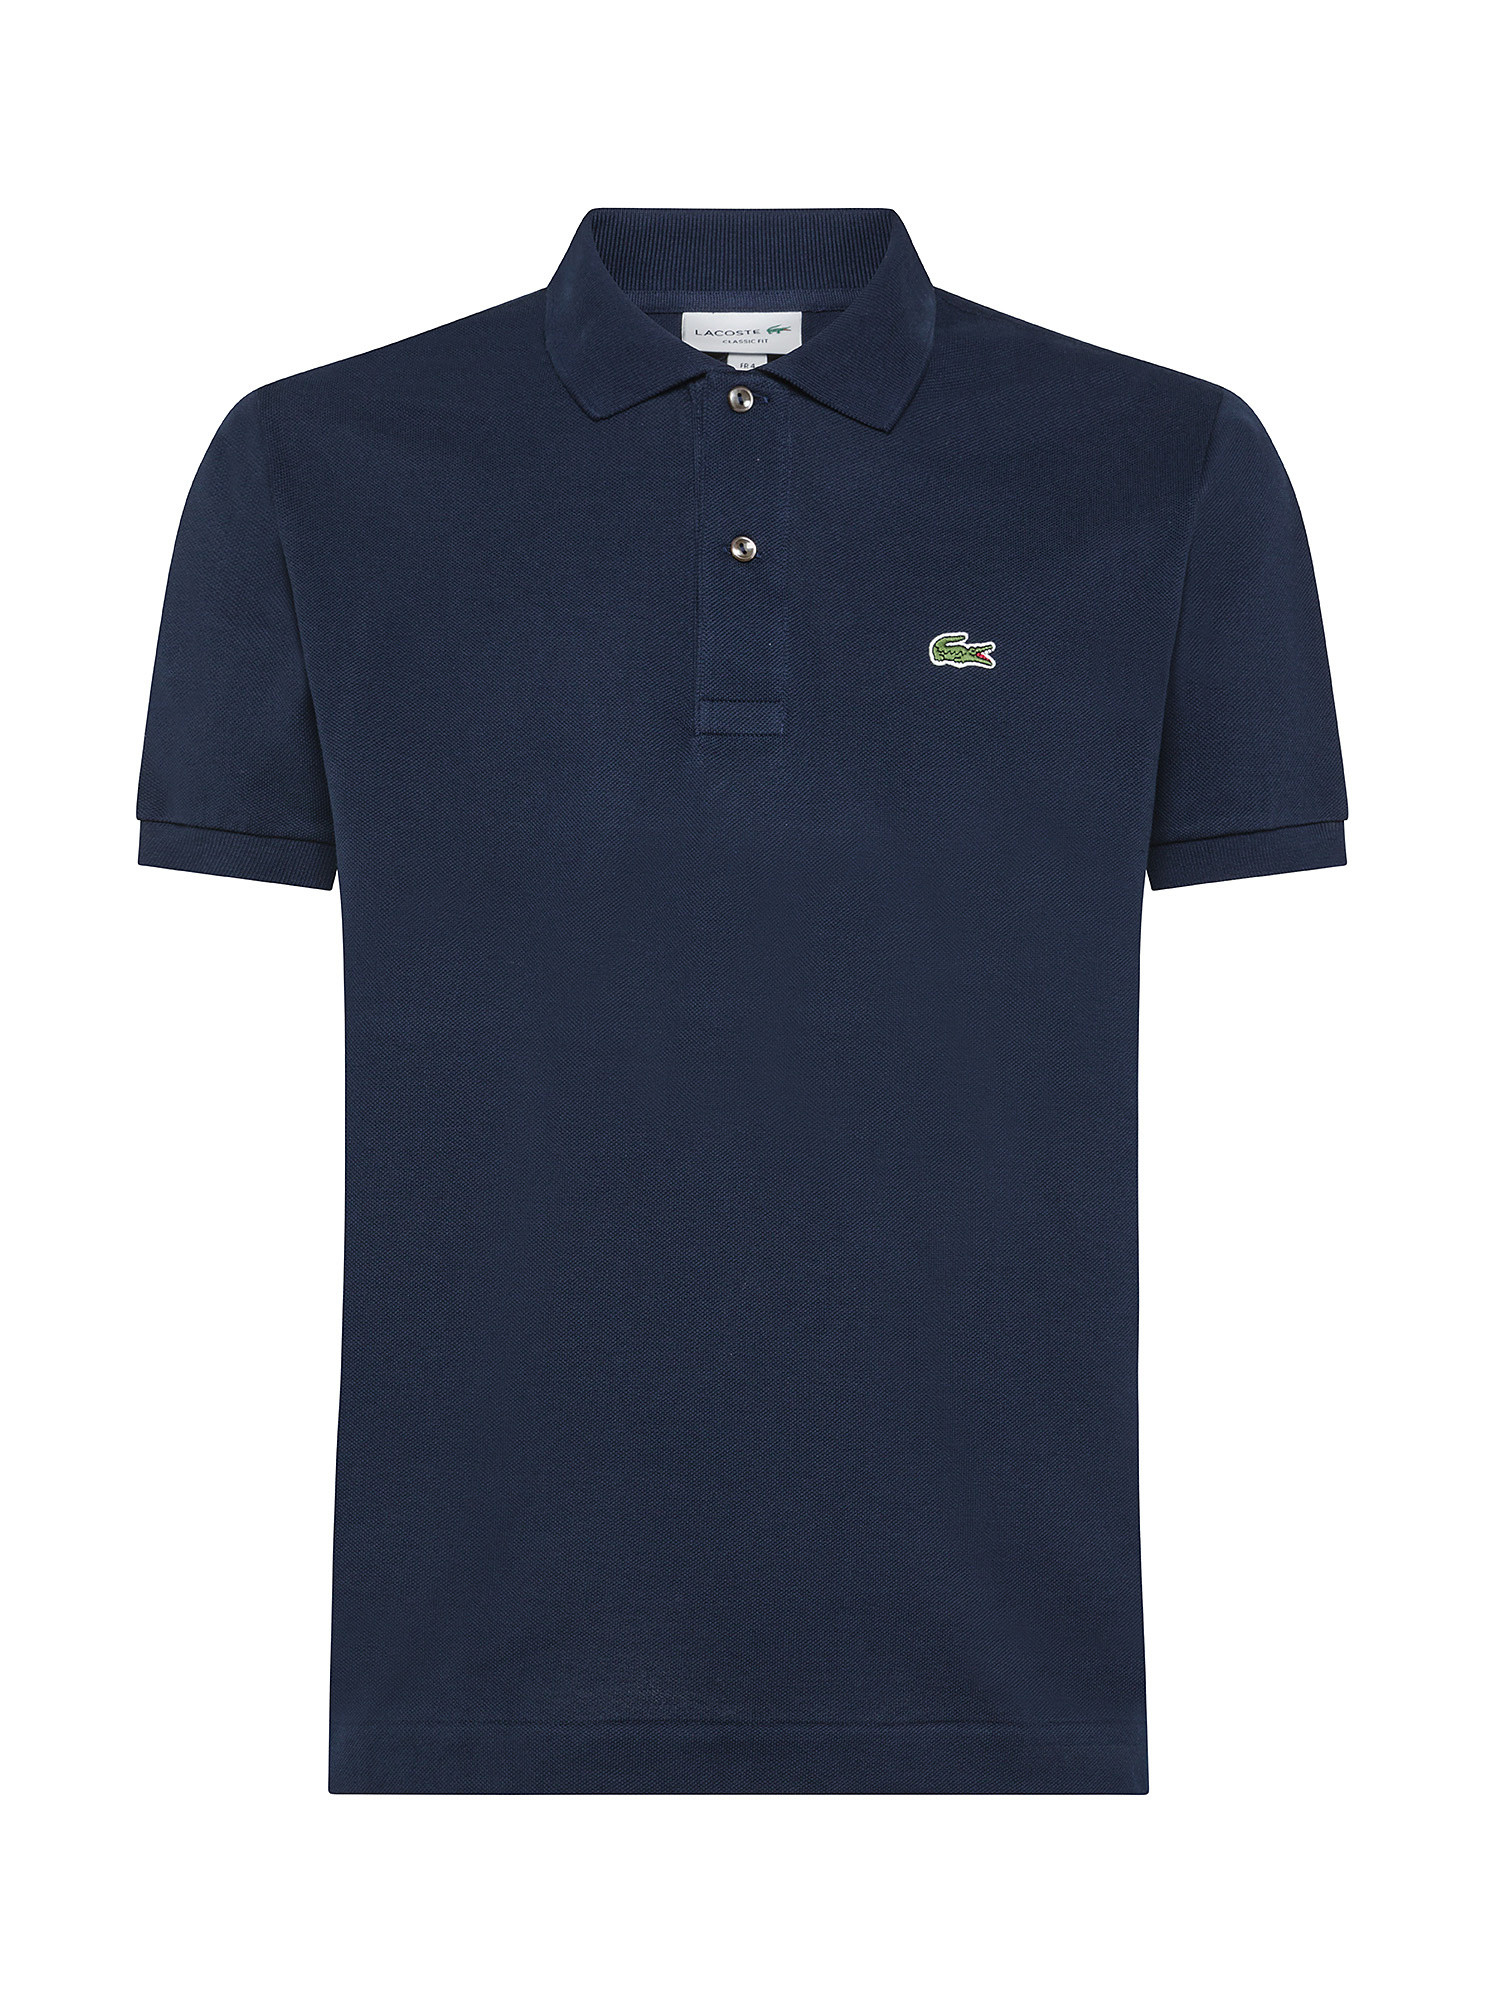 Lacoste - Classic cut polo shirt in petit piquè cotton, Dark Blue, large image number 0